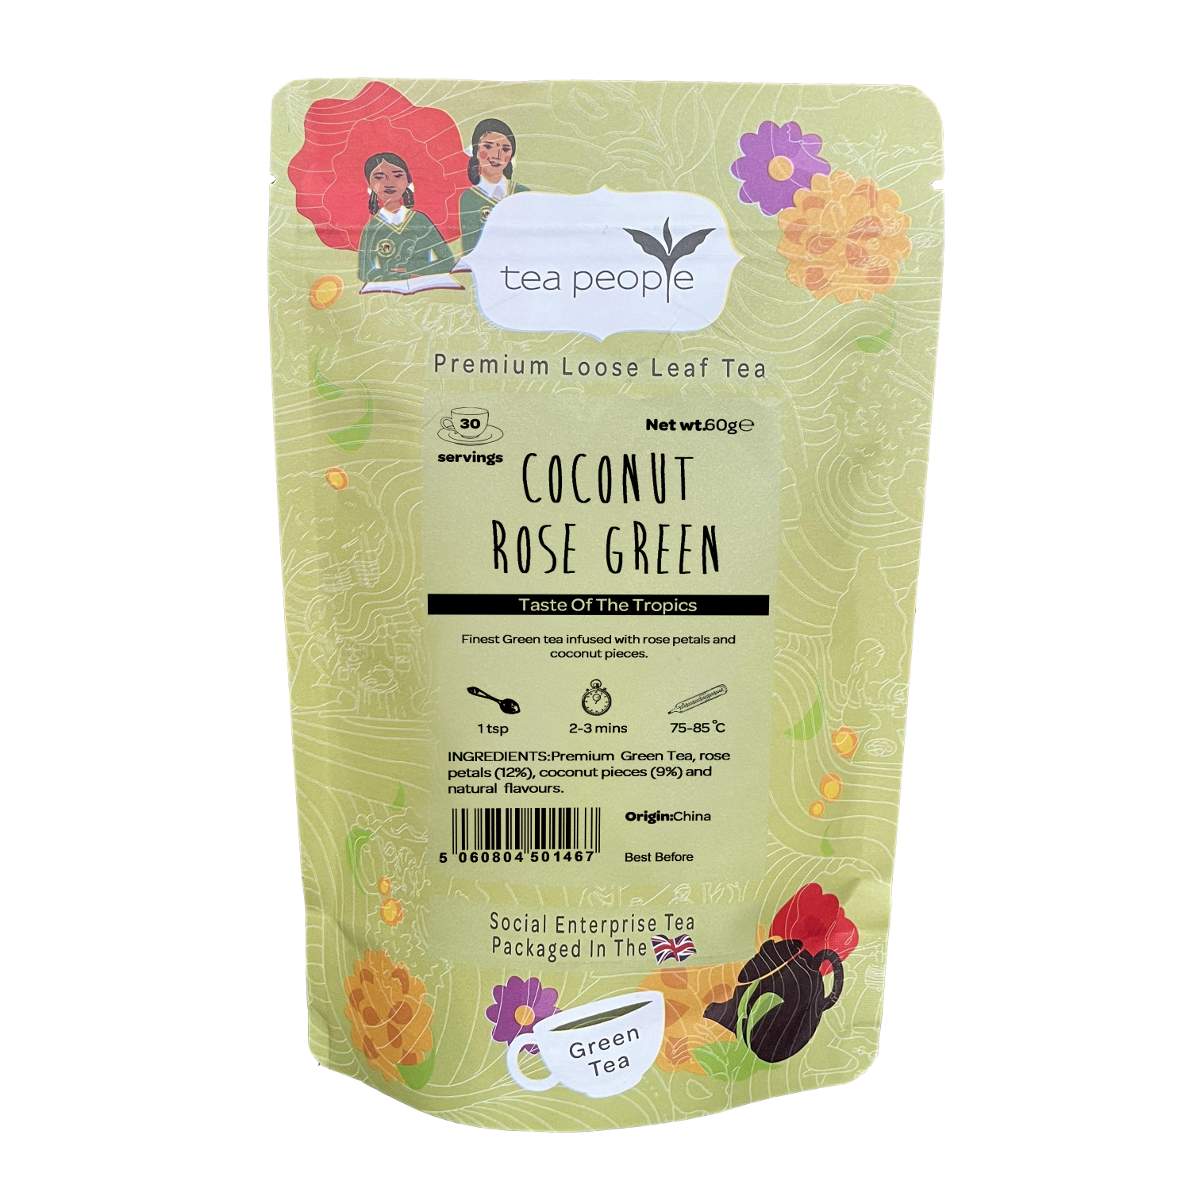 Coconut Rose Green - Loose Green Tea - 60g Retail Pack